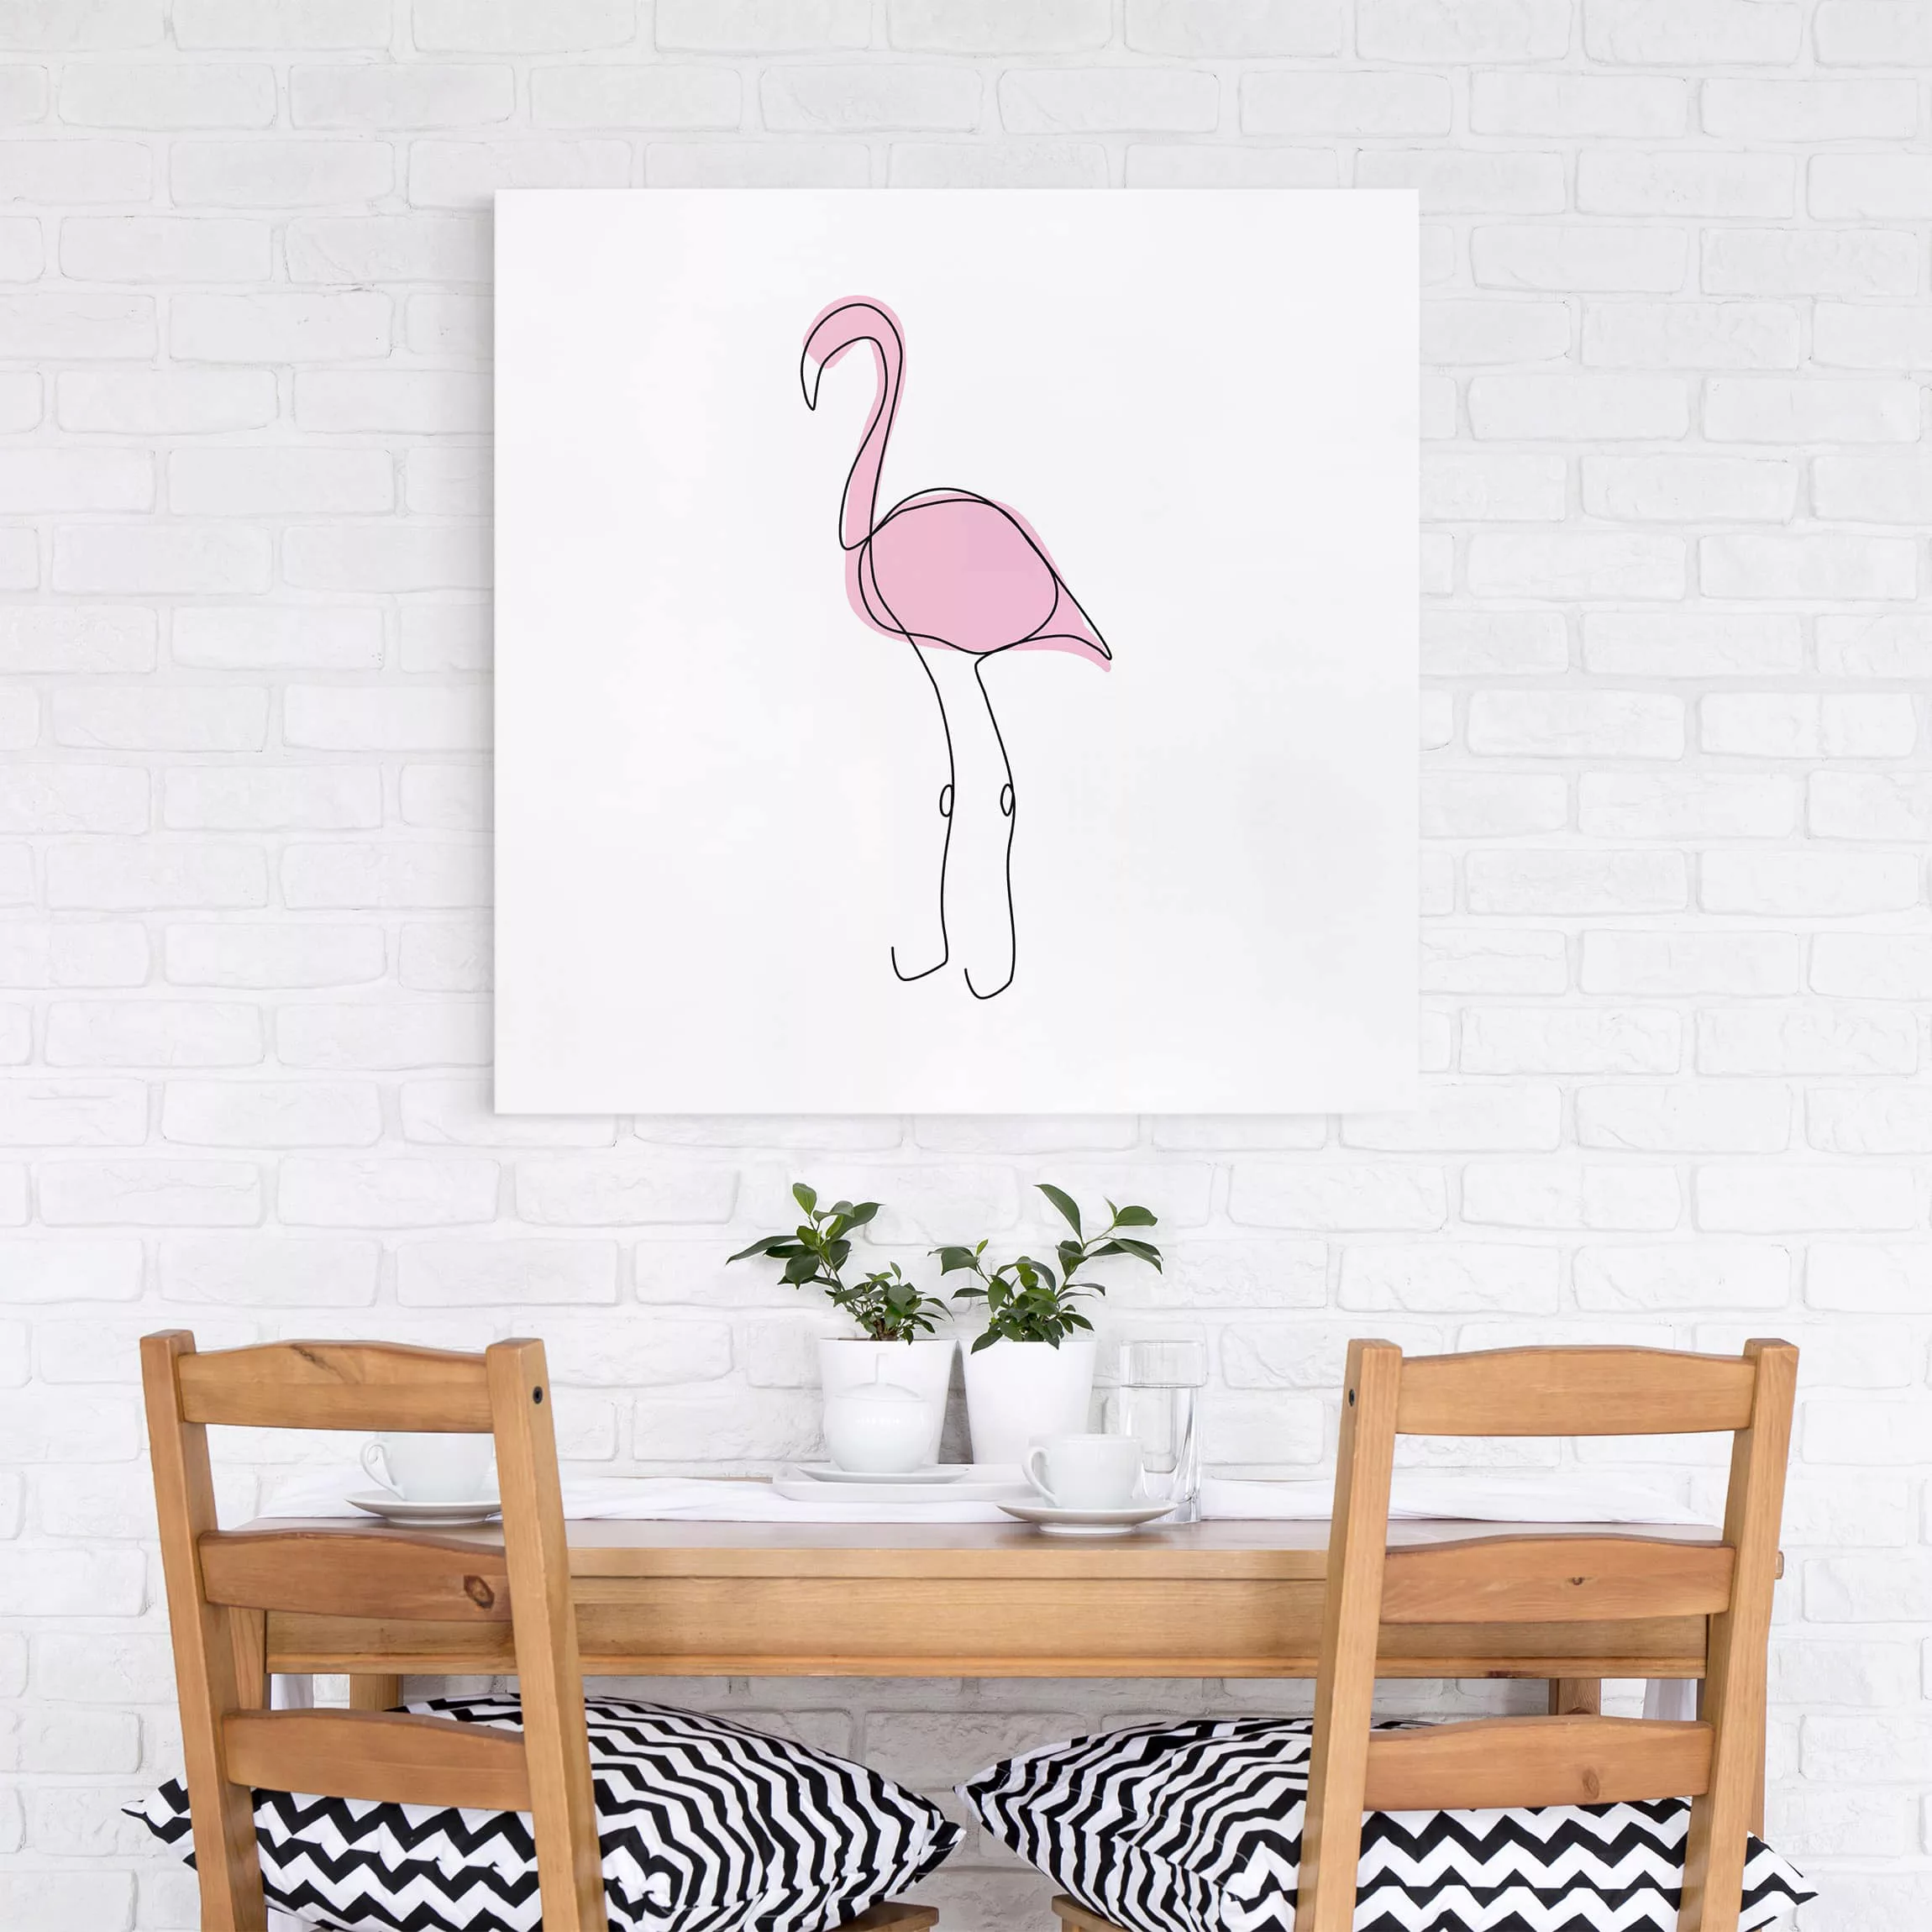 Leinwandbild Kinderzimmer - Quadrat Flamingo Line Art günstig online kaufen